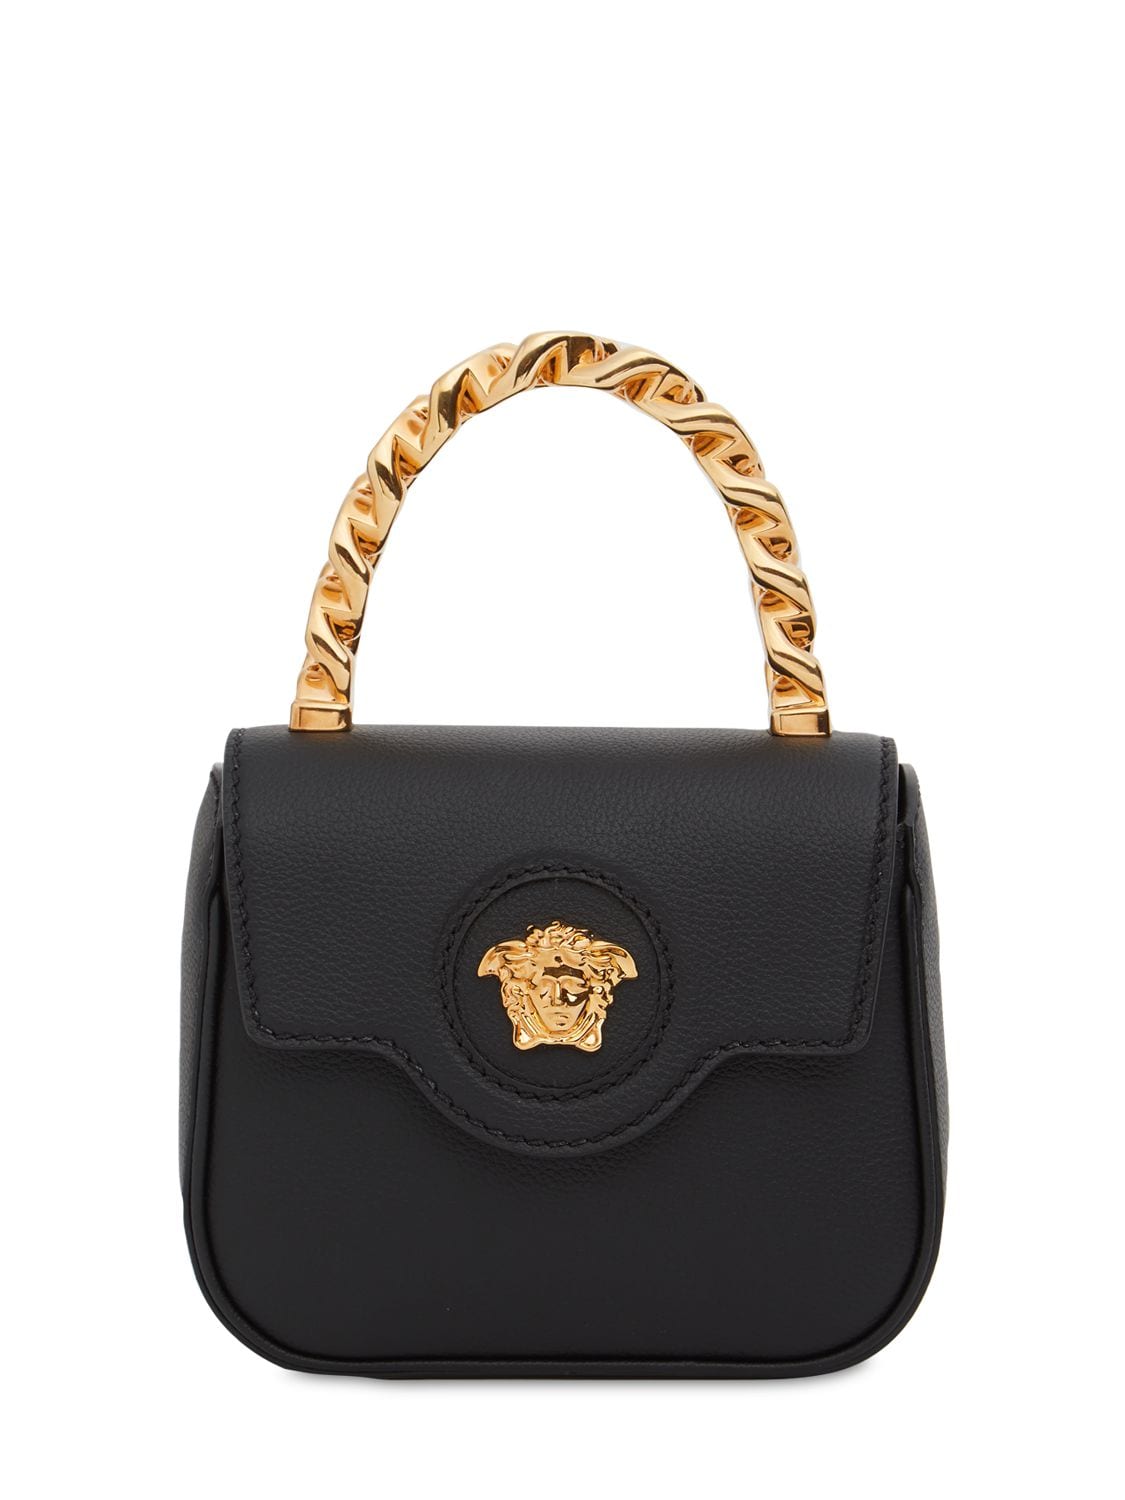 Versace - Medusa grained leather top handle bag - Black | Luisaviaroma